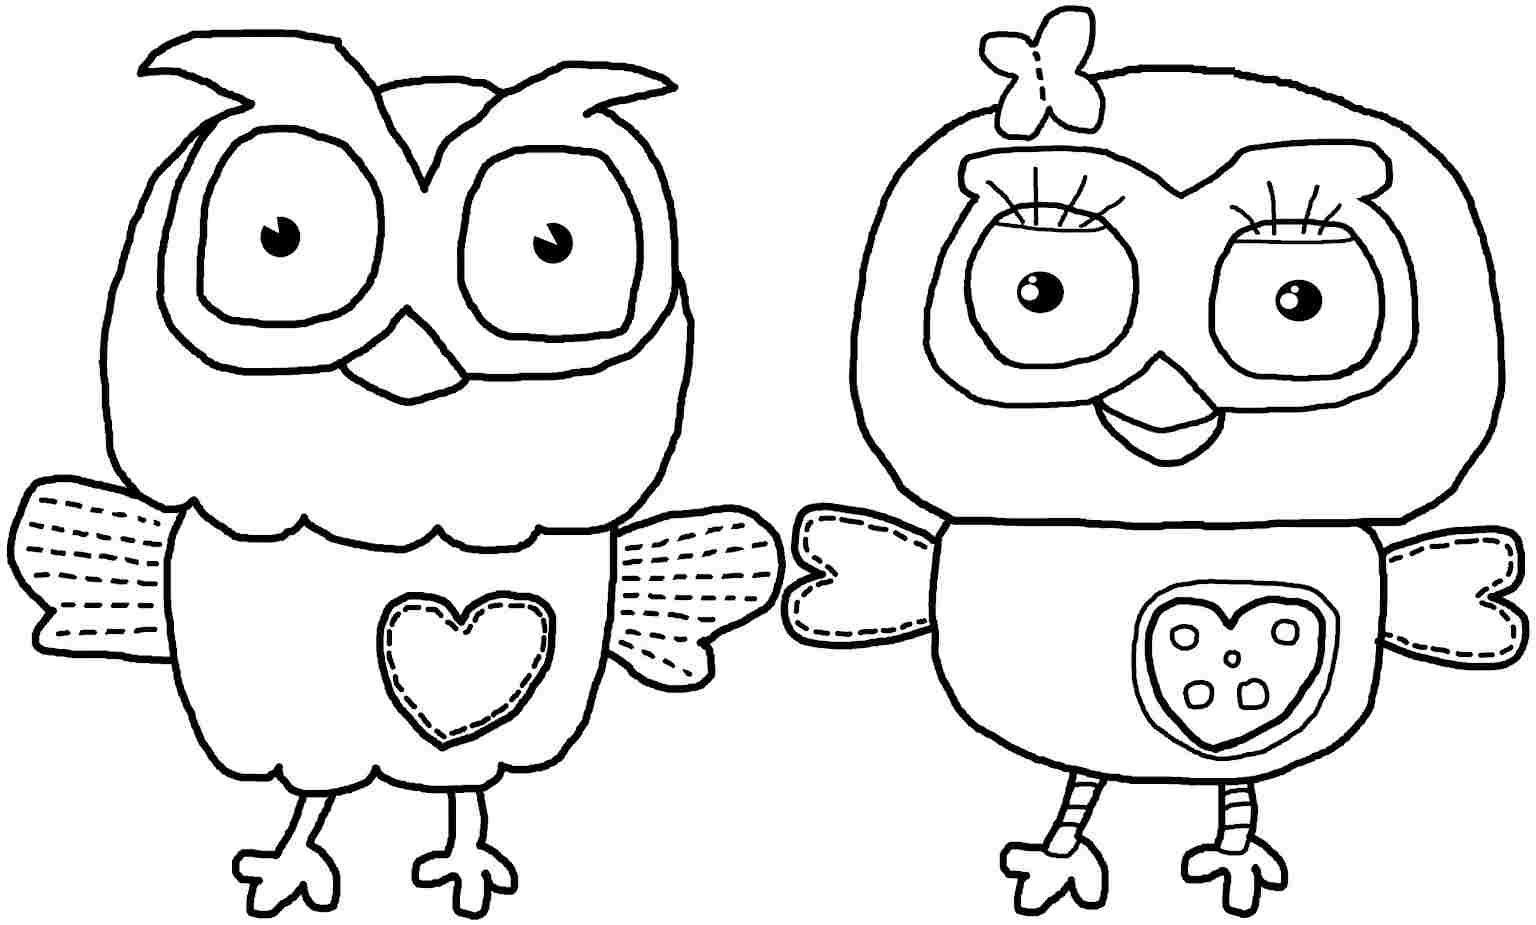 Free Owl Coloring Pages Image 2 - VoteForVerde.com